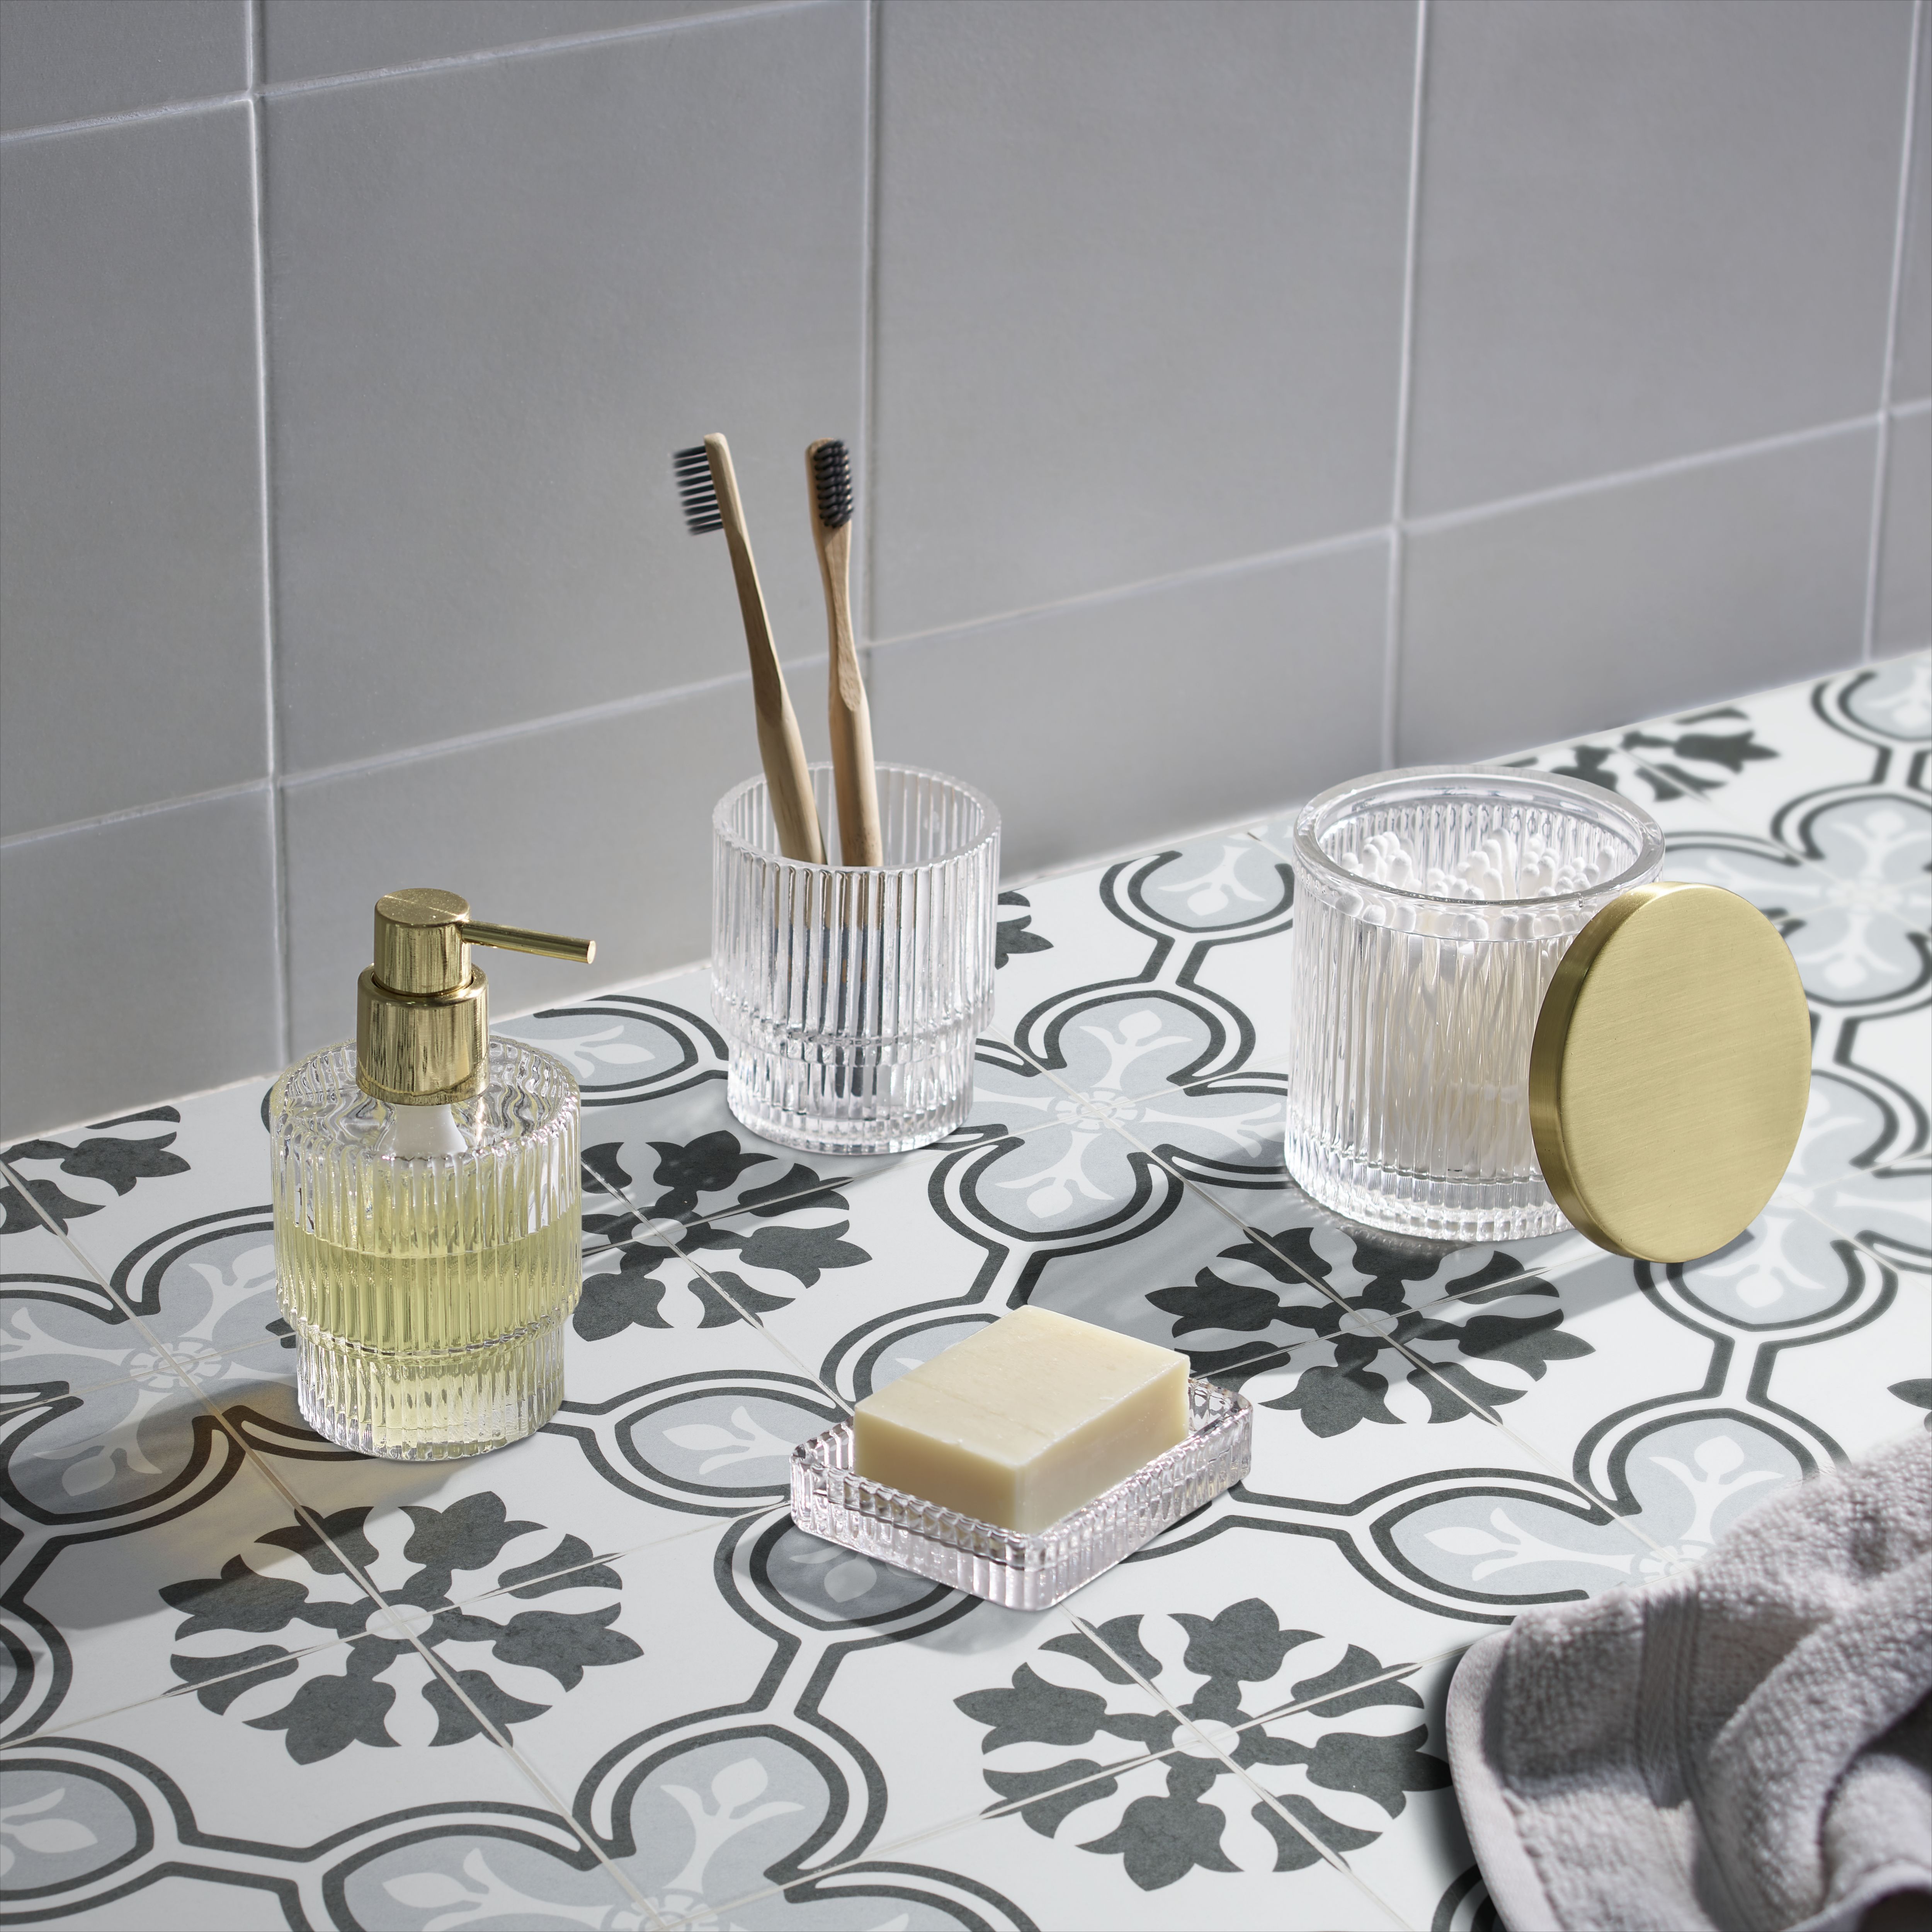 Loire Multicolour Matt Geometric Porcelain Wall & floor Tile, Pack of 7,  (L)450mm (W)450mm